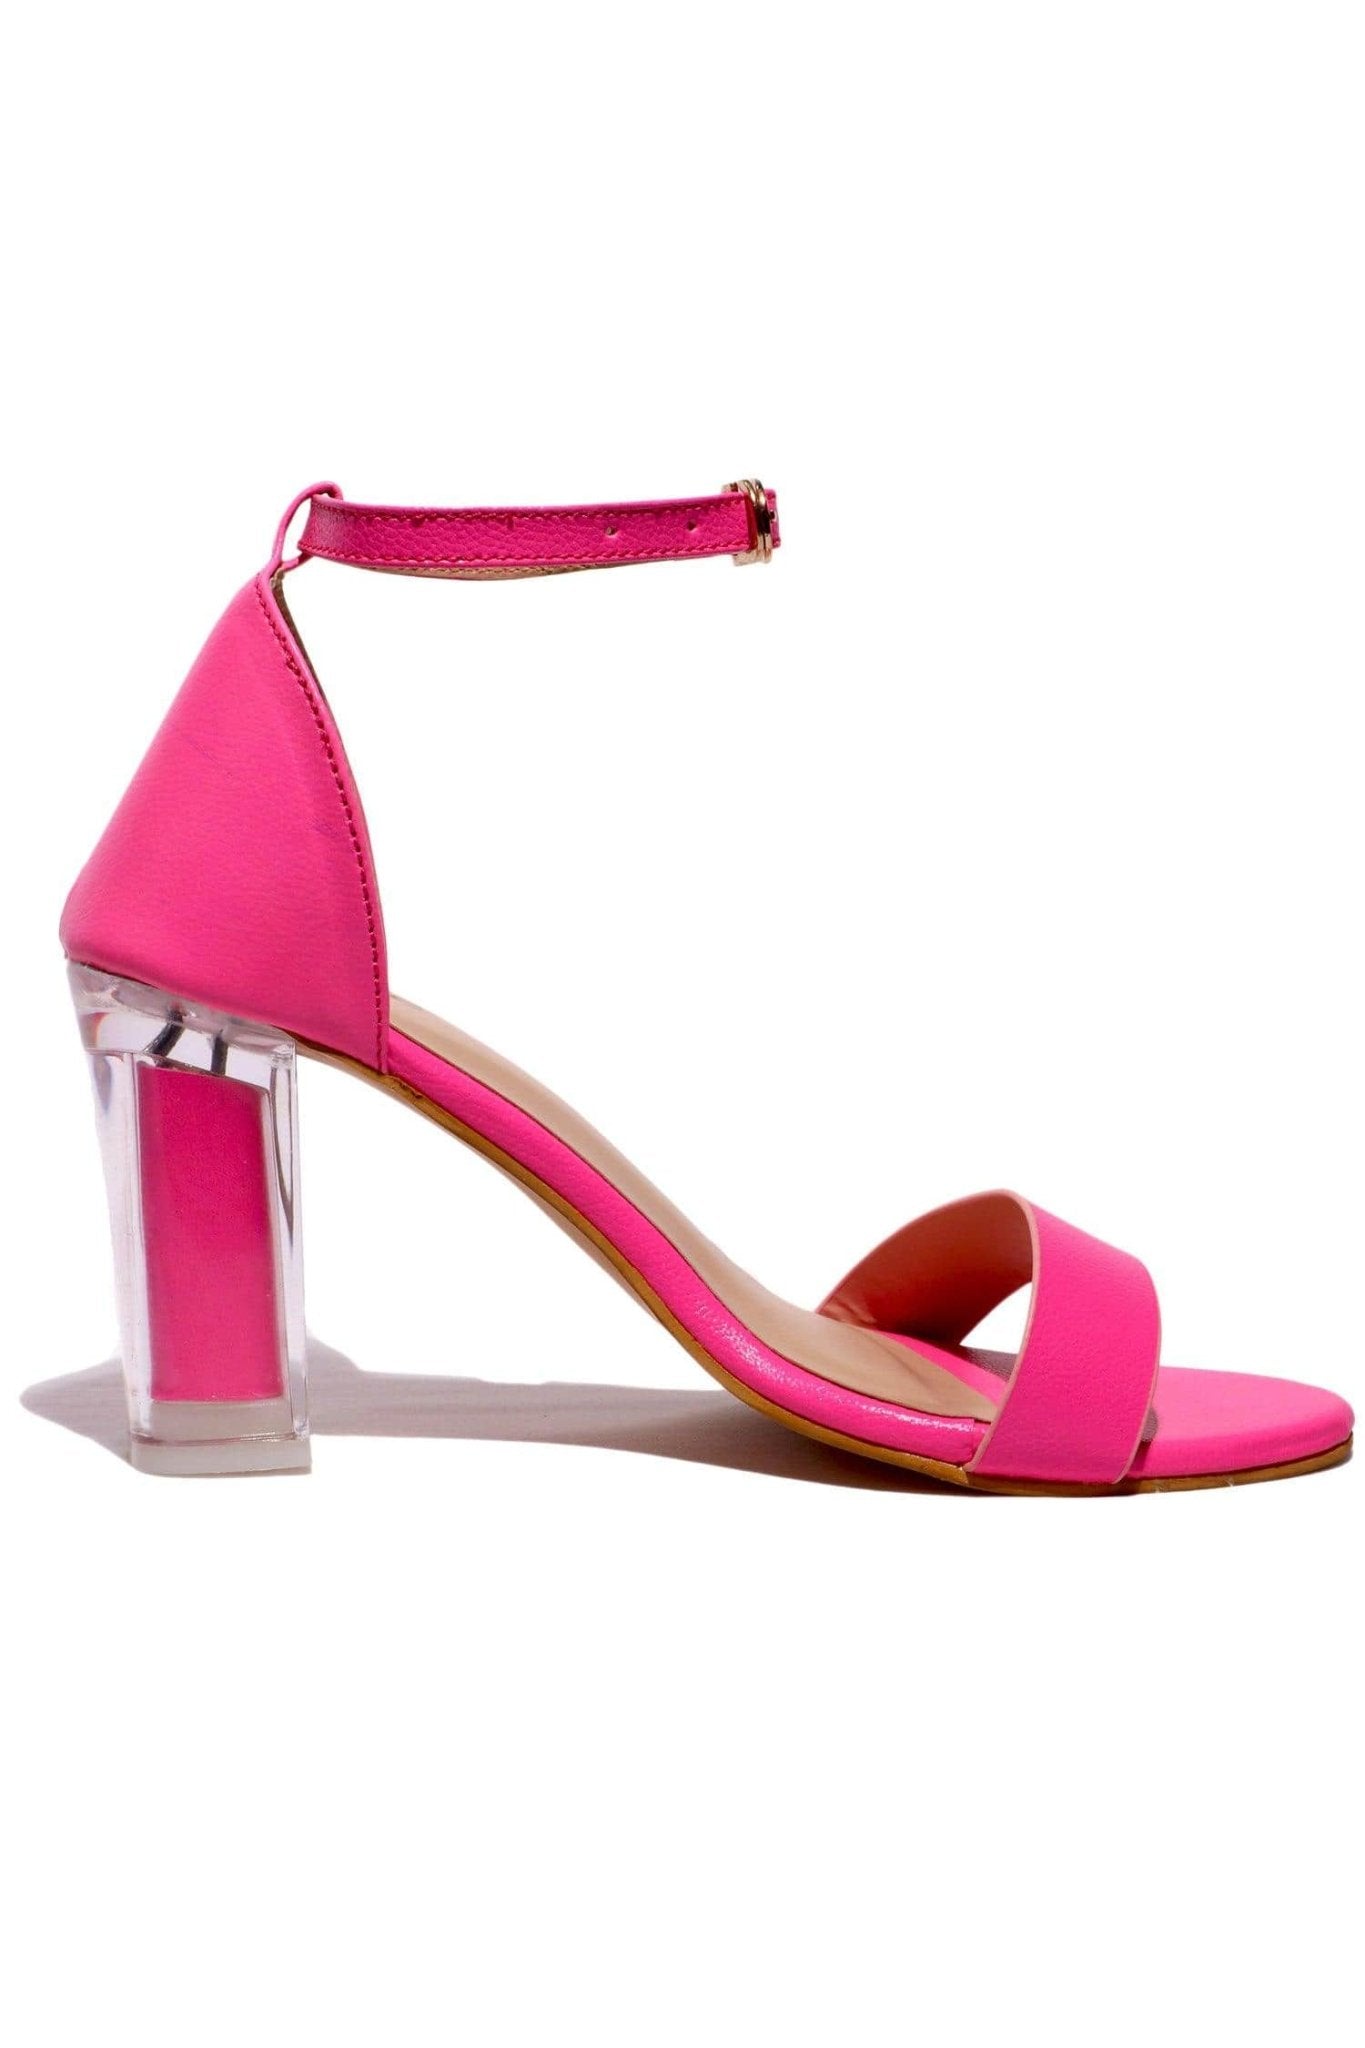 Hot Pink Ankle Strap Clear Block Heel Sandals - BEEGLEE